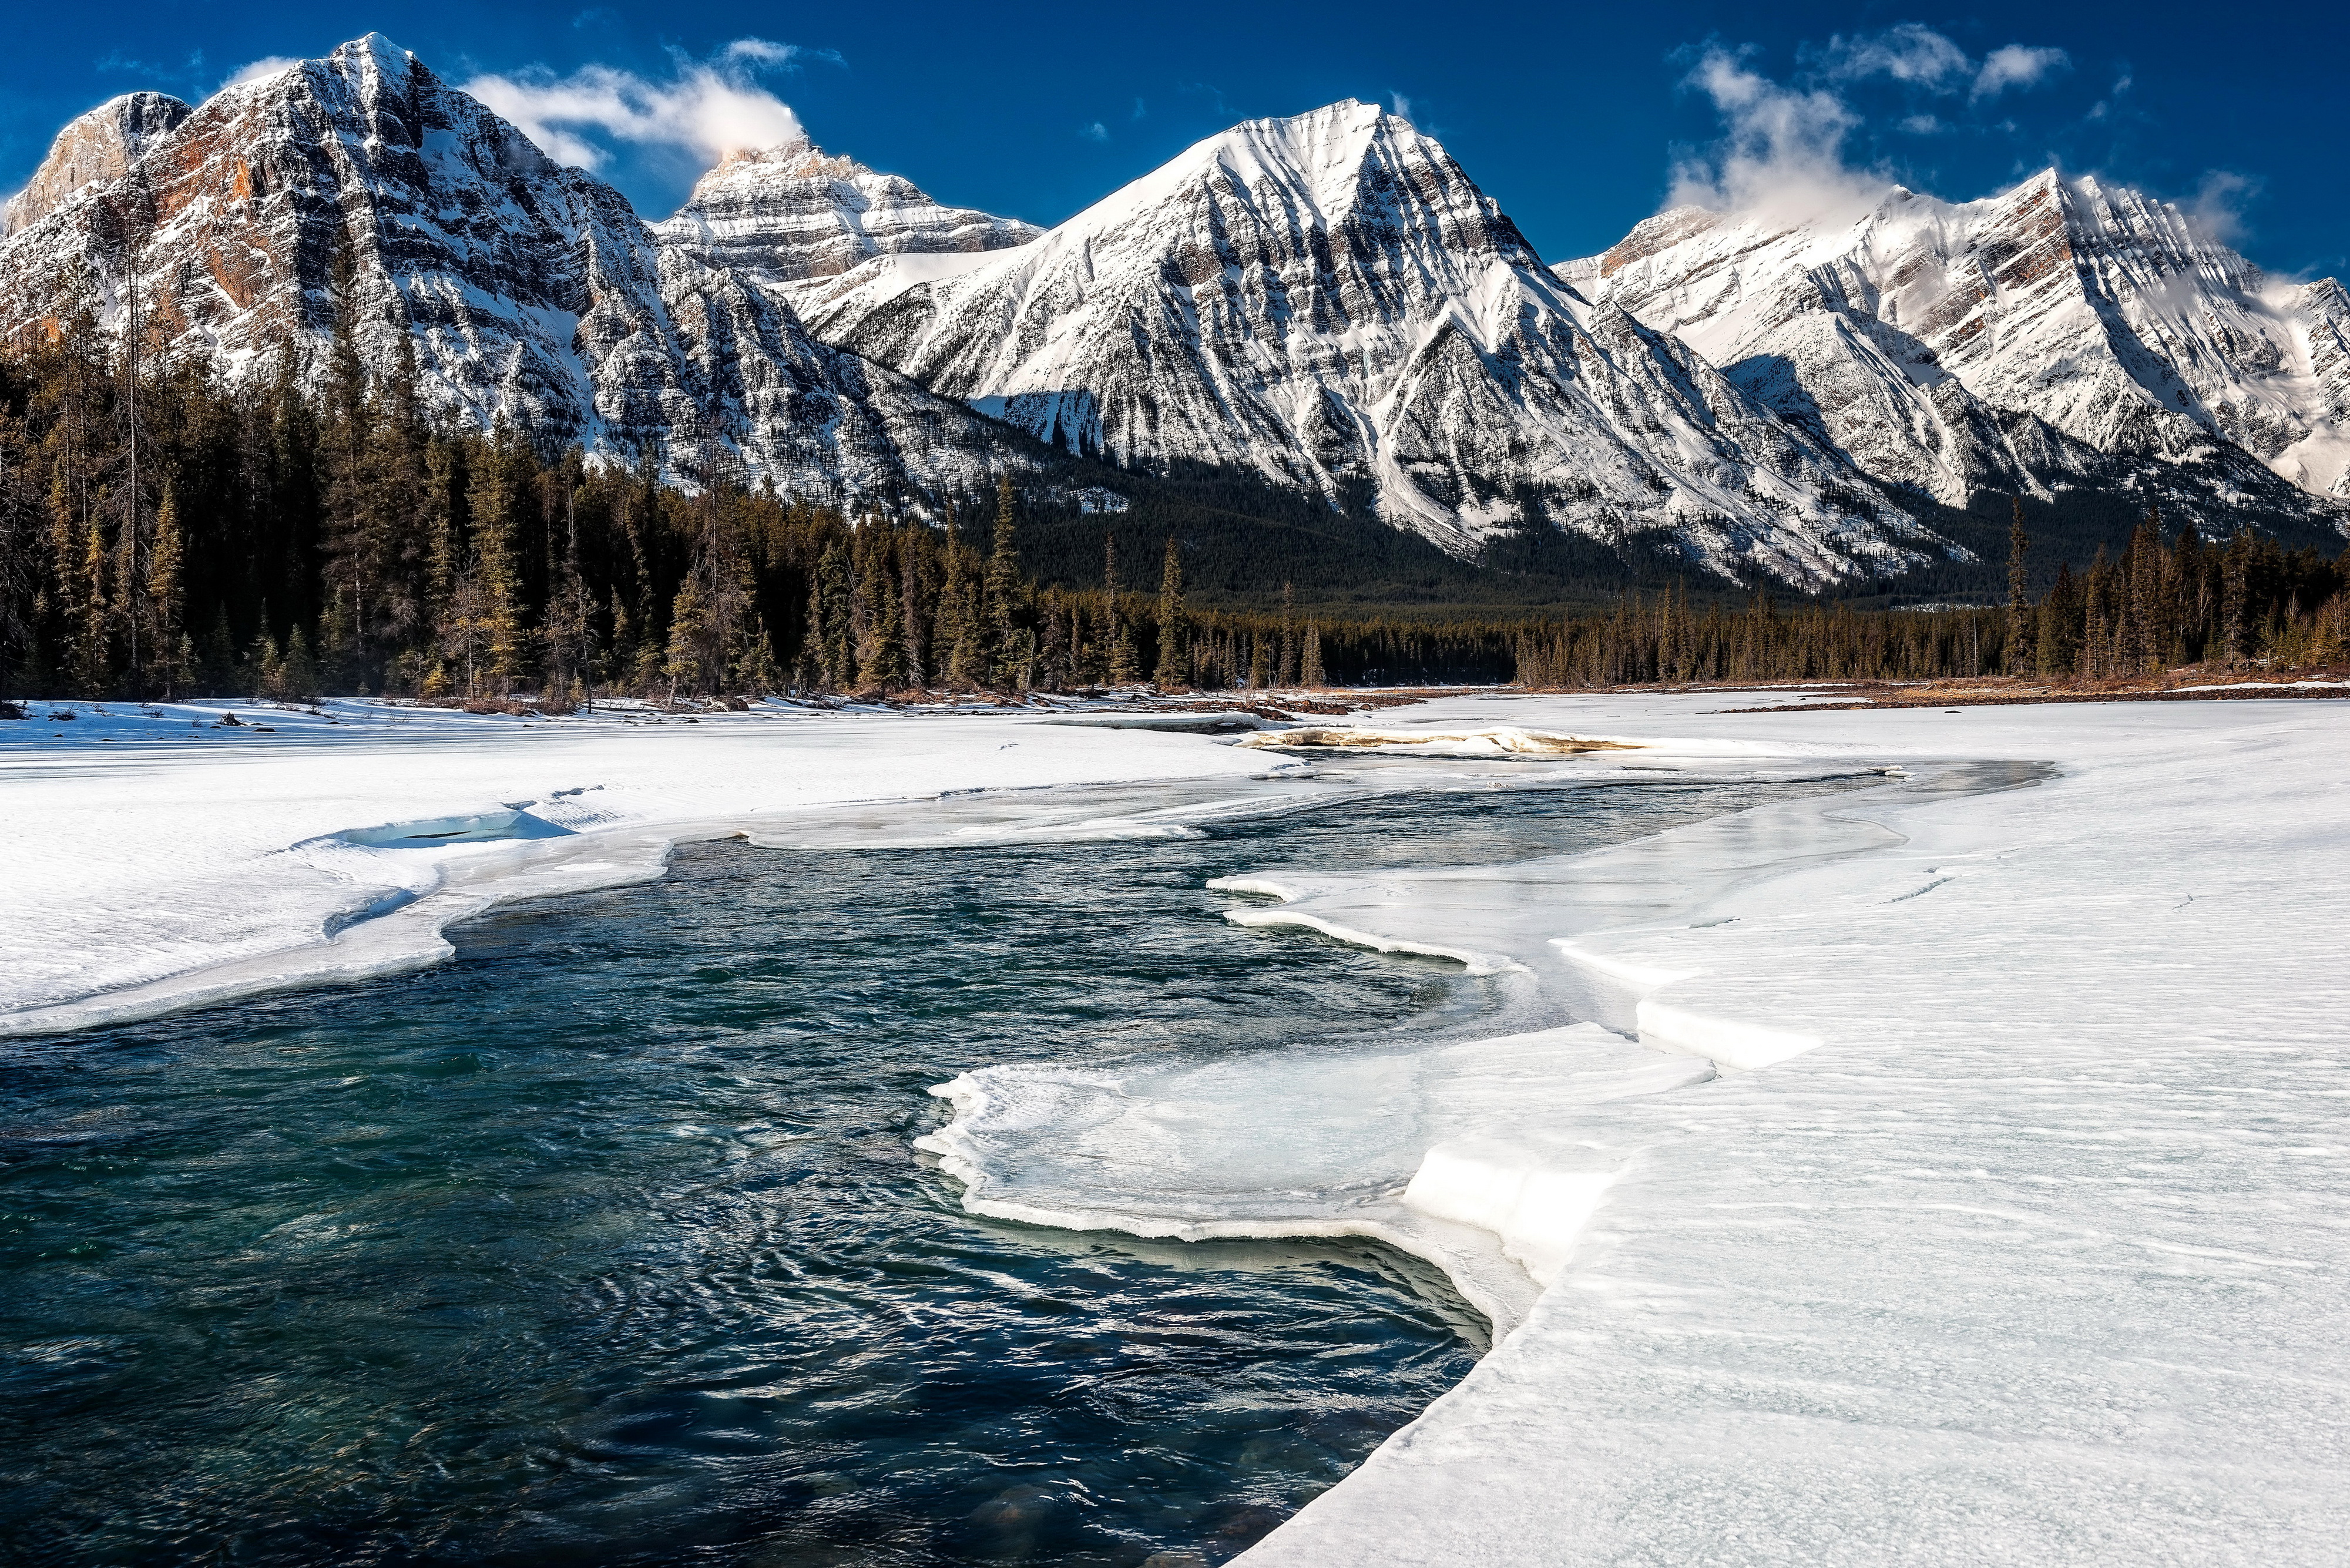 Download Wallpaper snow winter river canada mountains, 4000x Mountains and frozen river, Canada